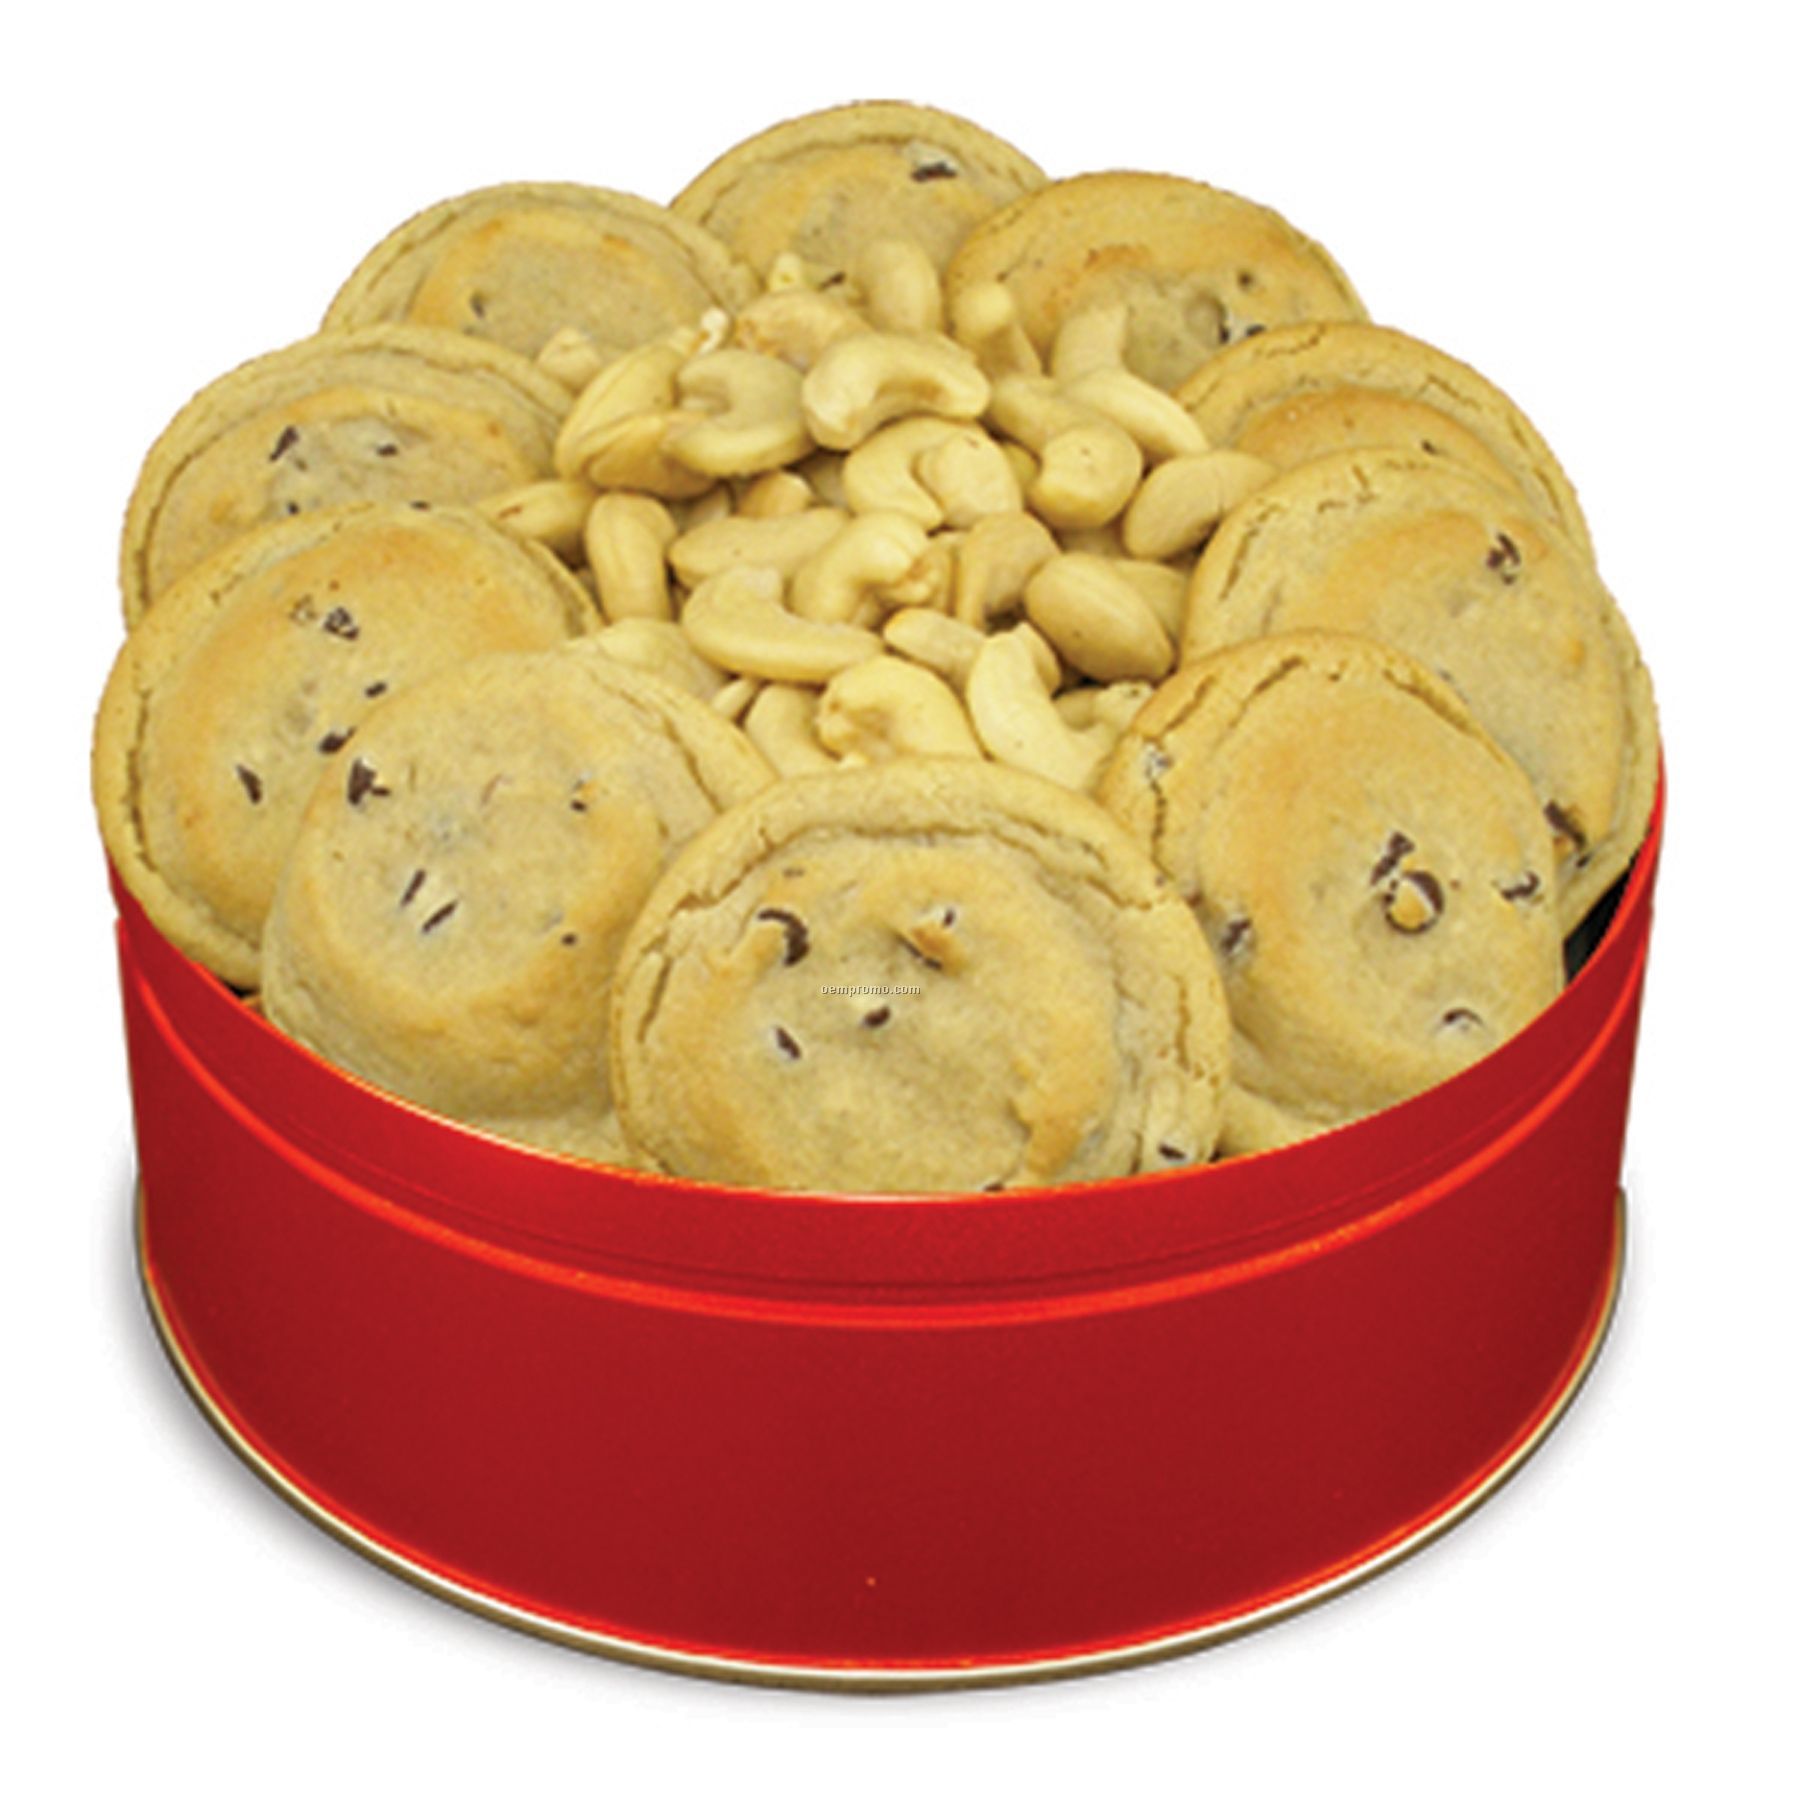 Cookie Nut Combos - Chocolate Chip (10 Cookies) Fancy Jumbo Cashews (10 Oz)